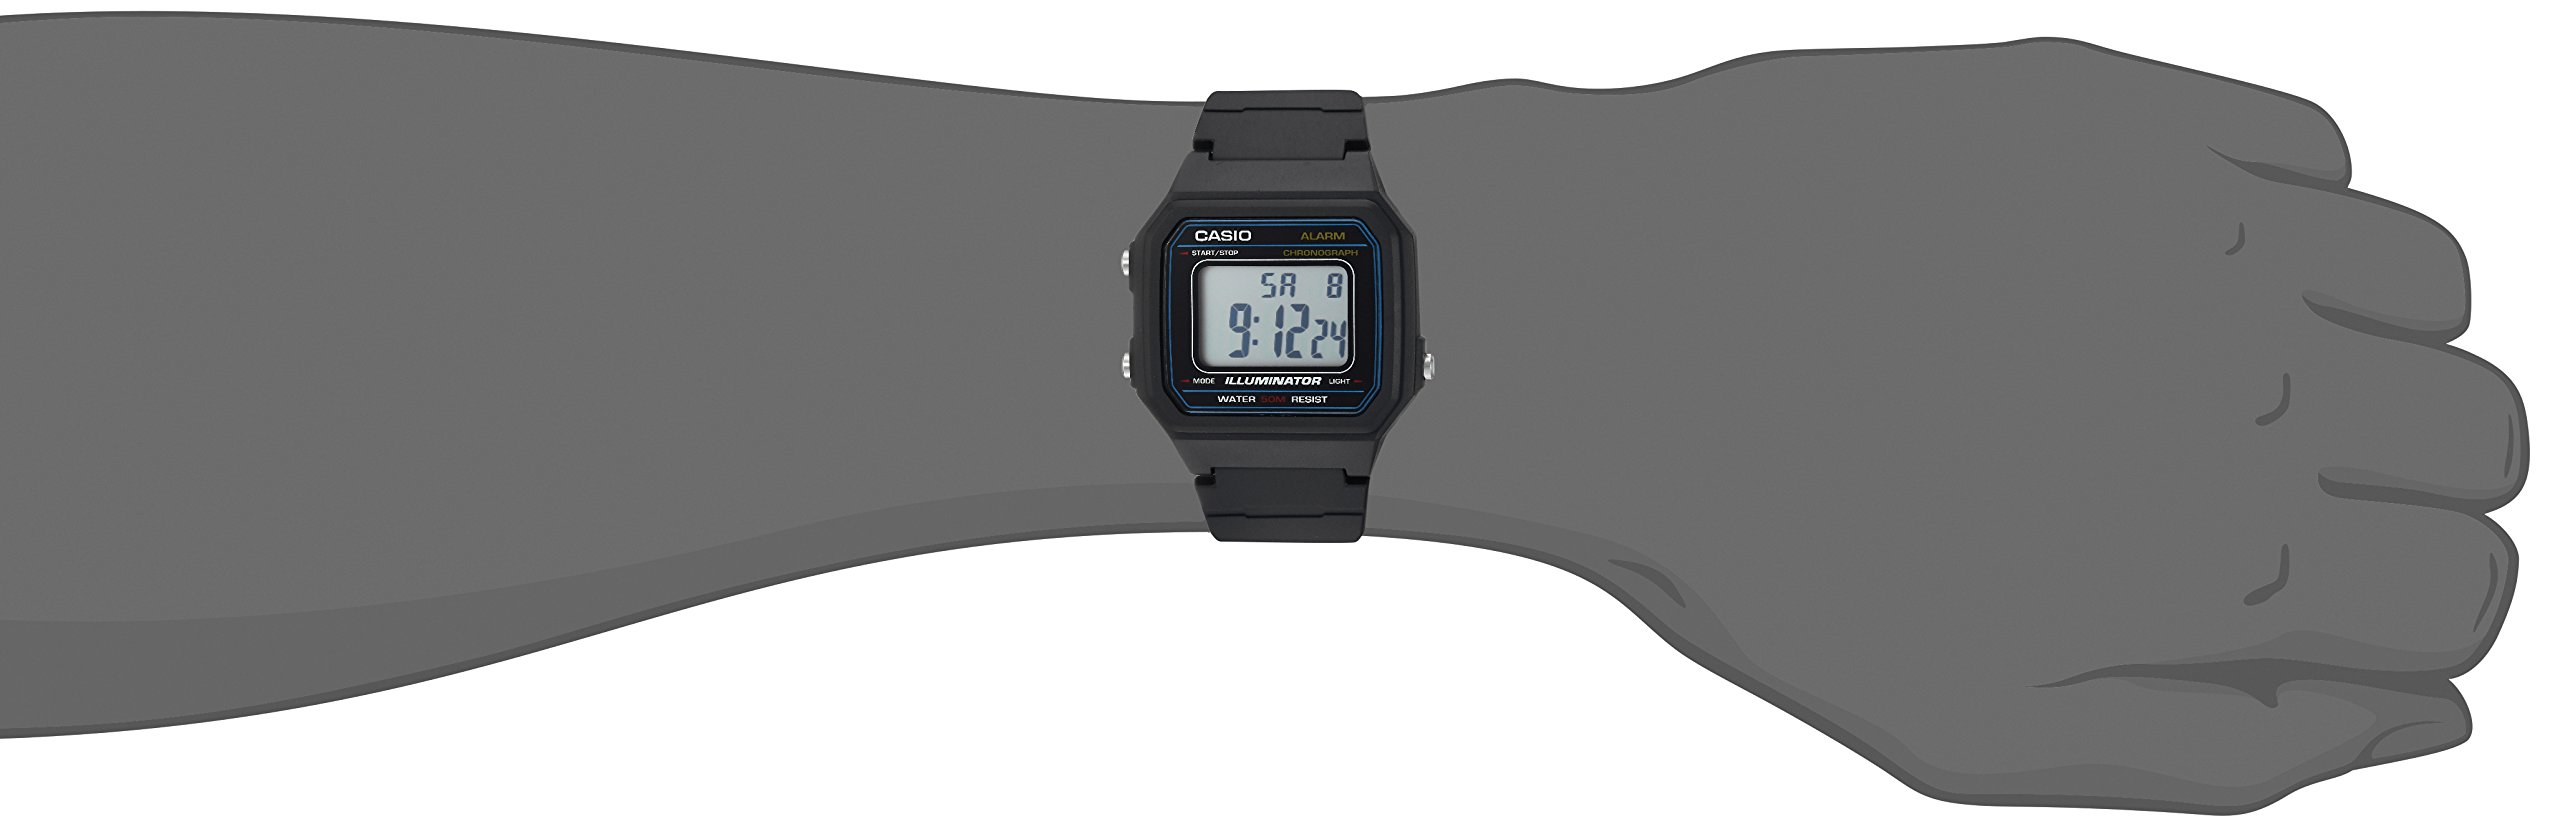 Casio Men's 'Classic' Quartz Resin Casual Watch, Color:Black (Model: W-217H-1AVCF)